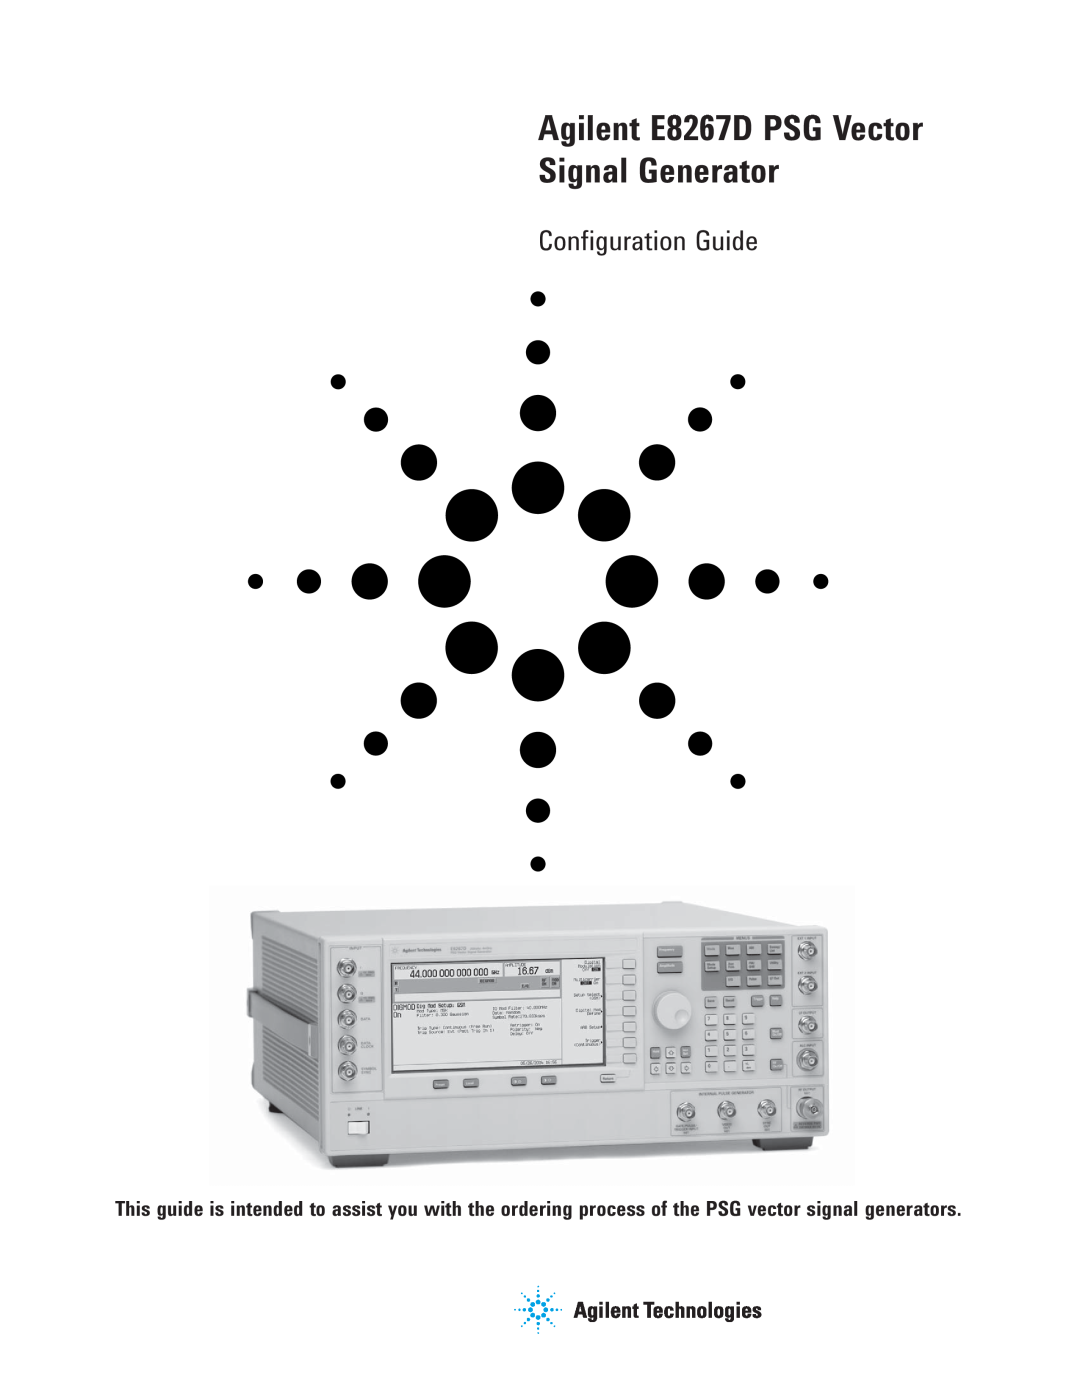 Agilent Technologies manual Agilent E8267D PSG Vector Signal Generator, Configuration Guide 